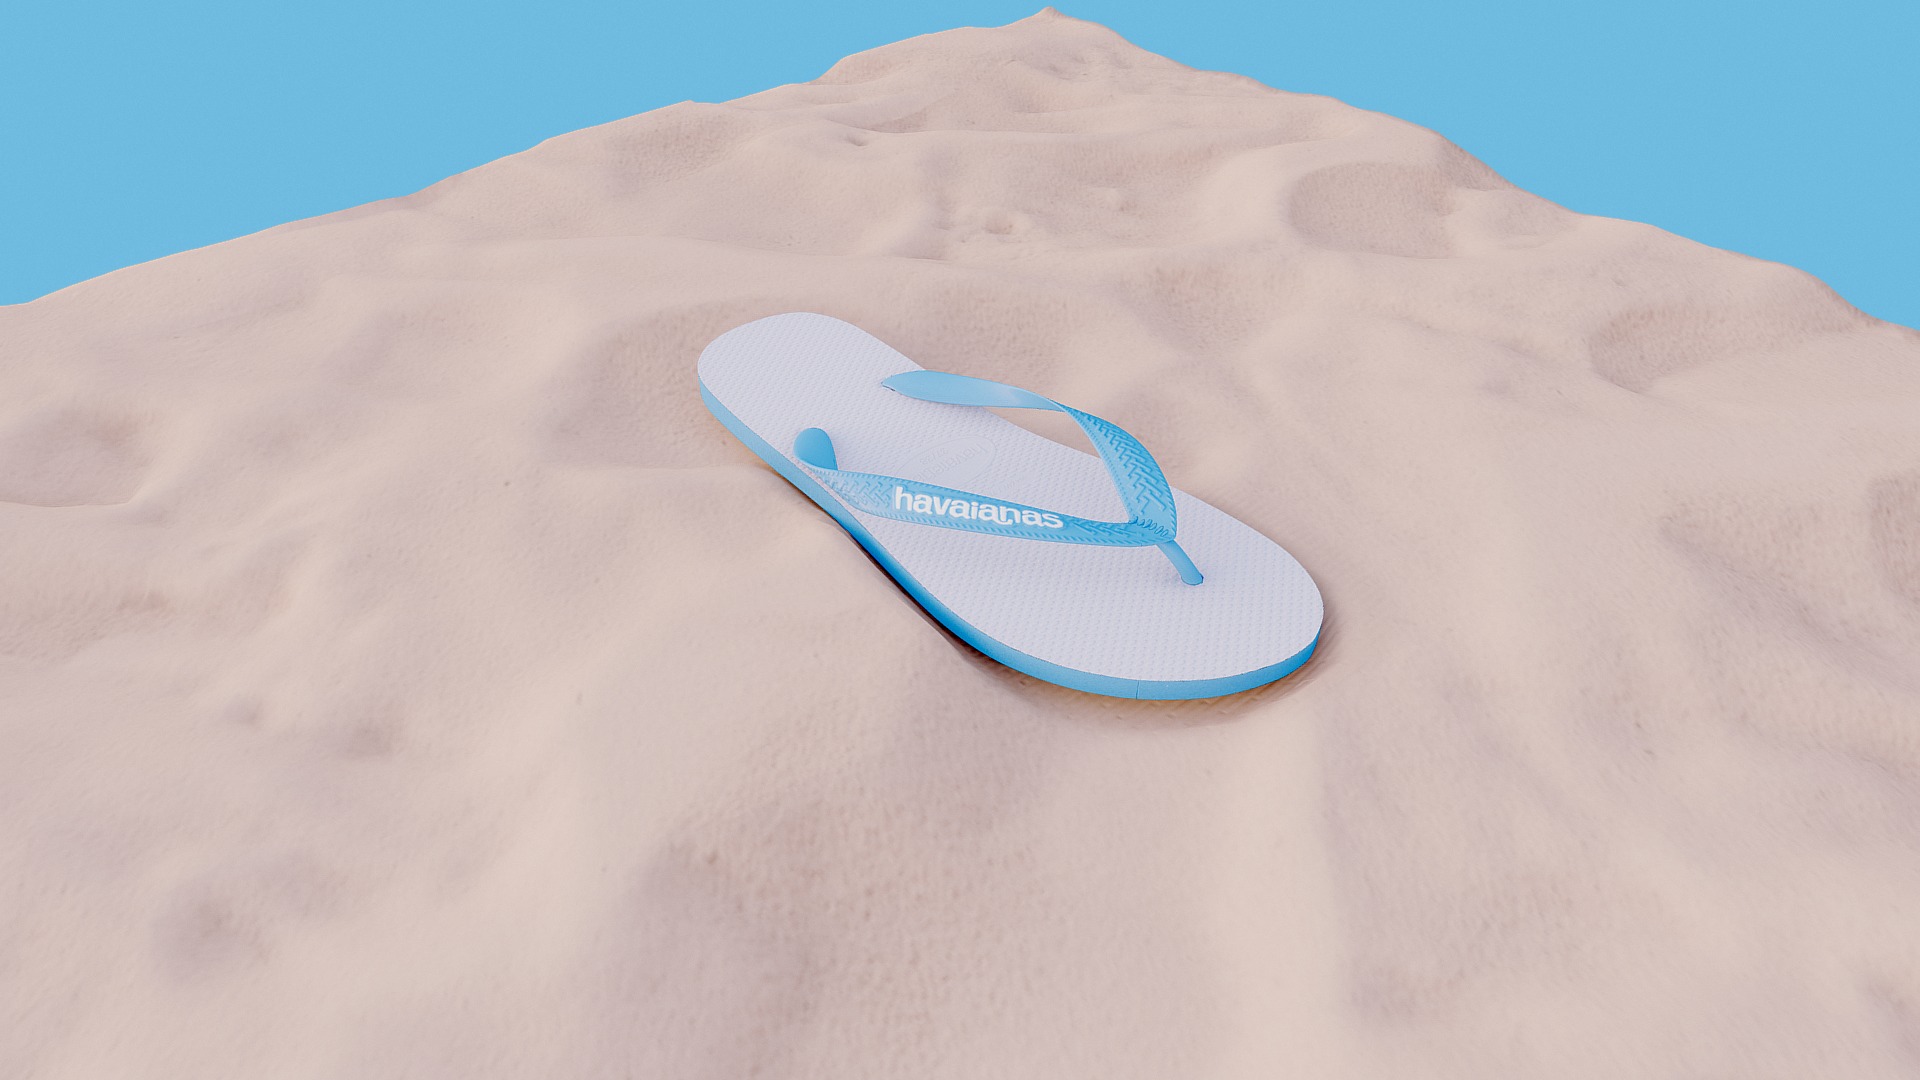 Havaianas de Praia
3D Art by Isaque Sprogis - Havaianas de Praia - 3D model by Isaque Sprogis (@sprogis) 3d model